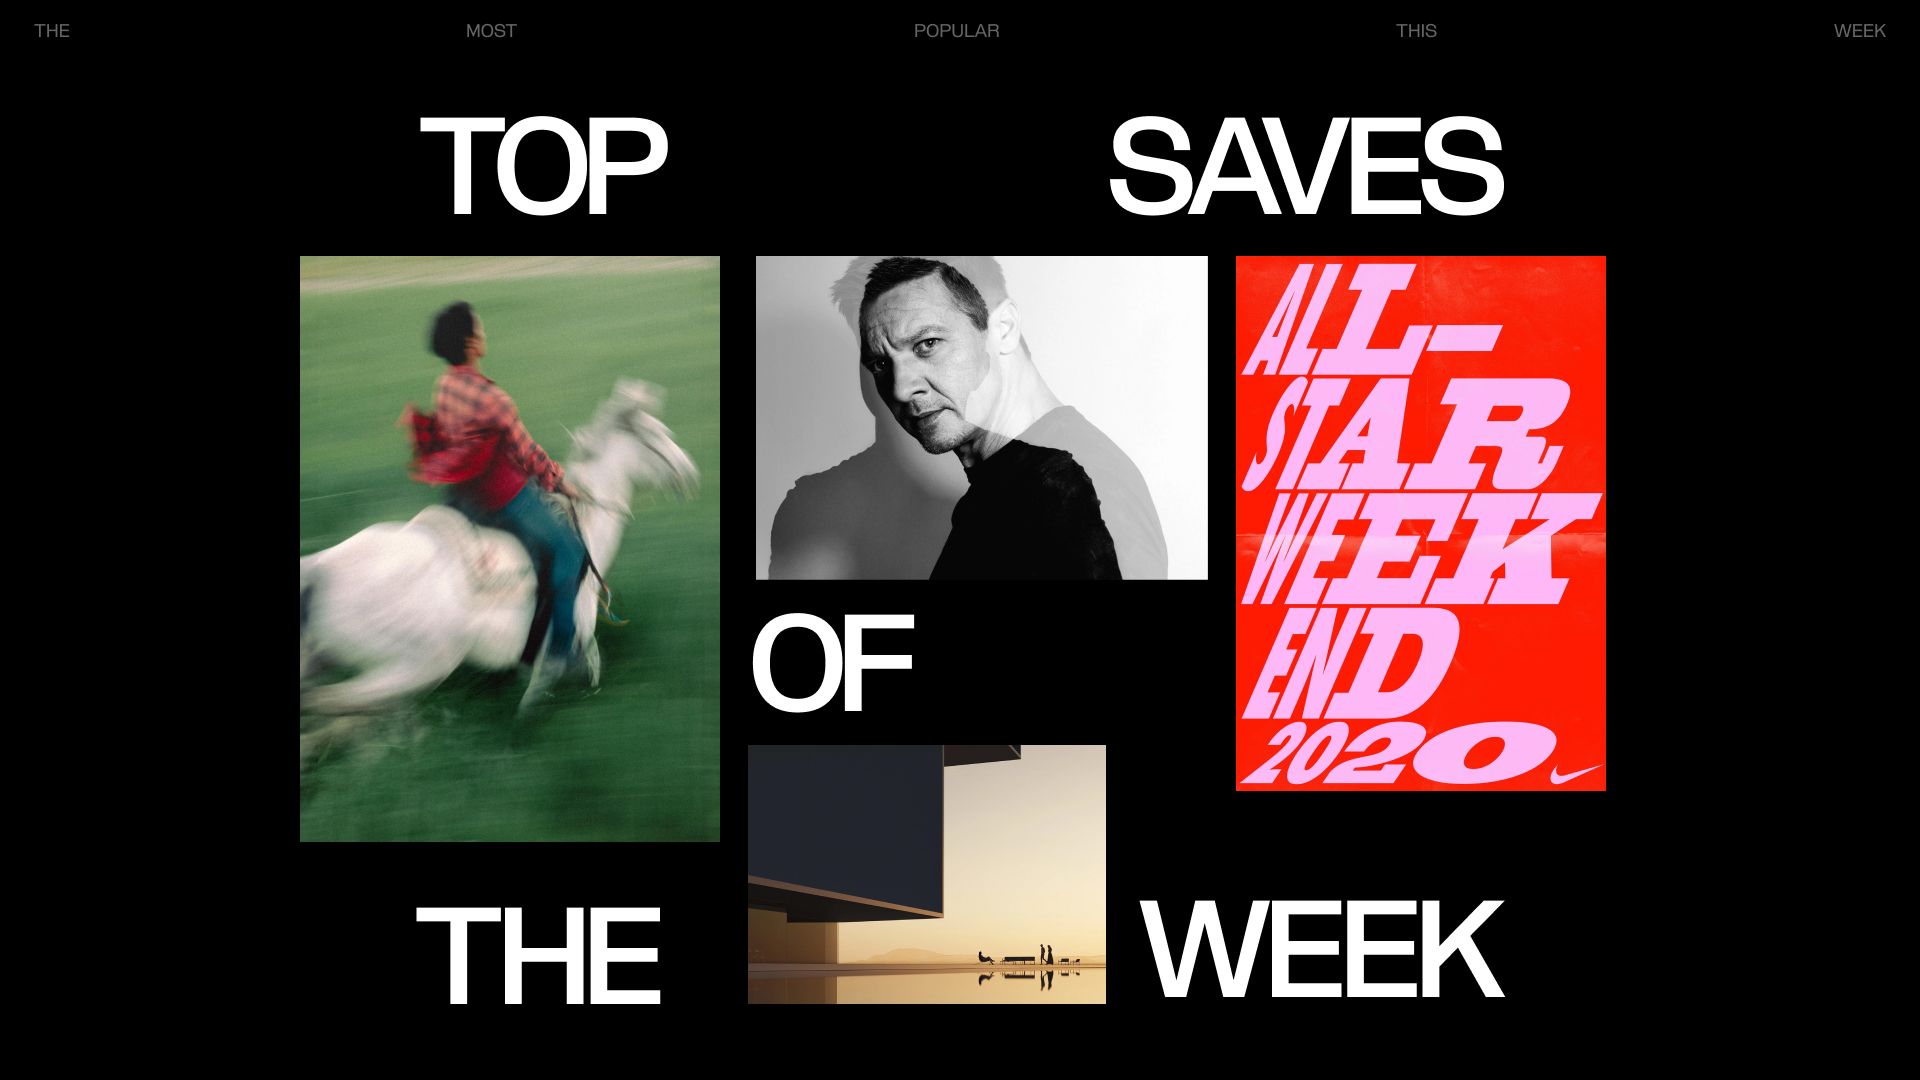 Most saved images this week on SAVEE — 001